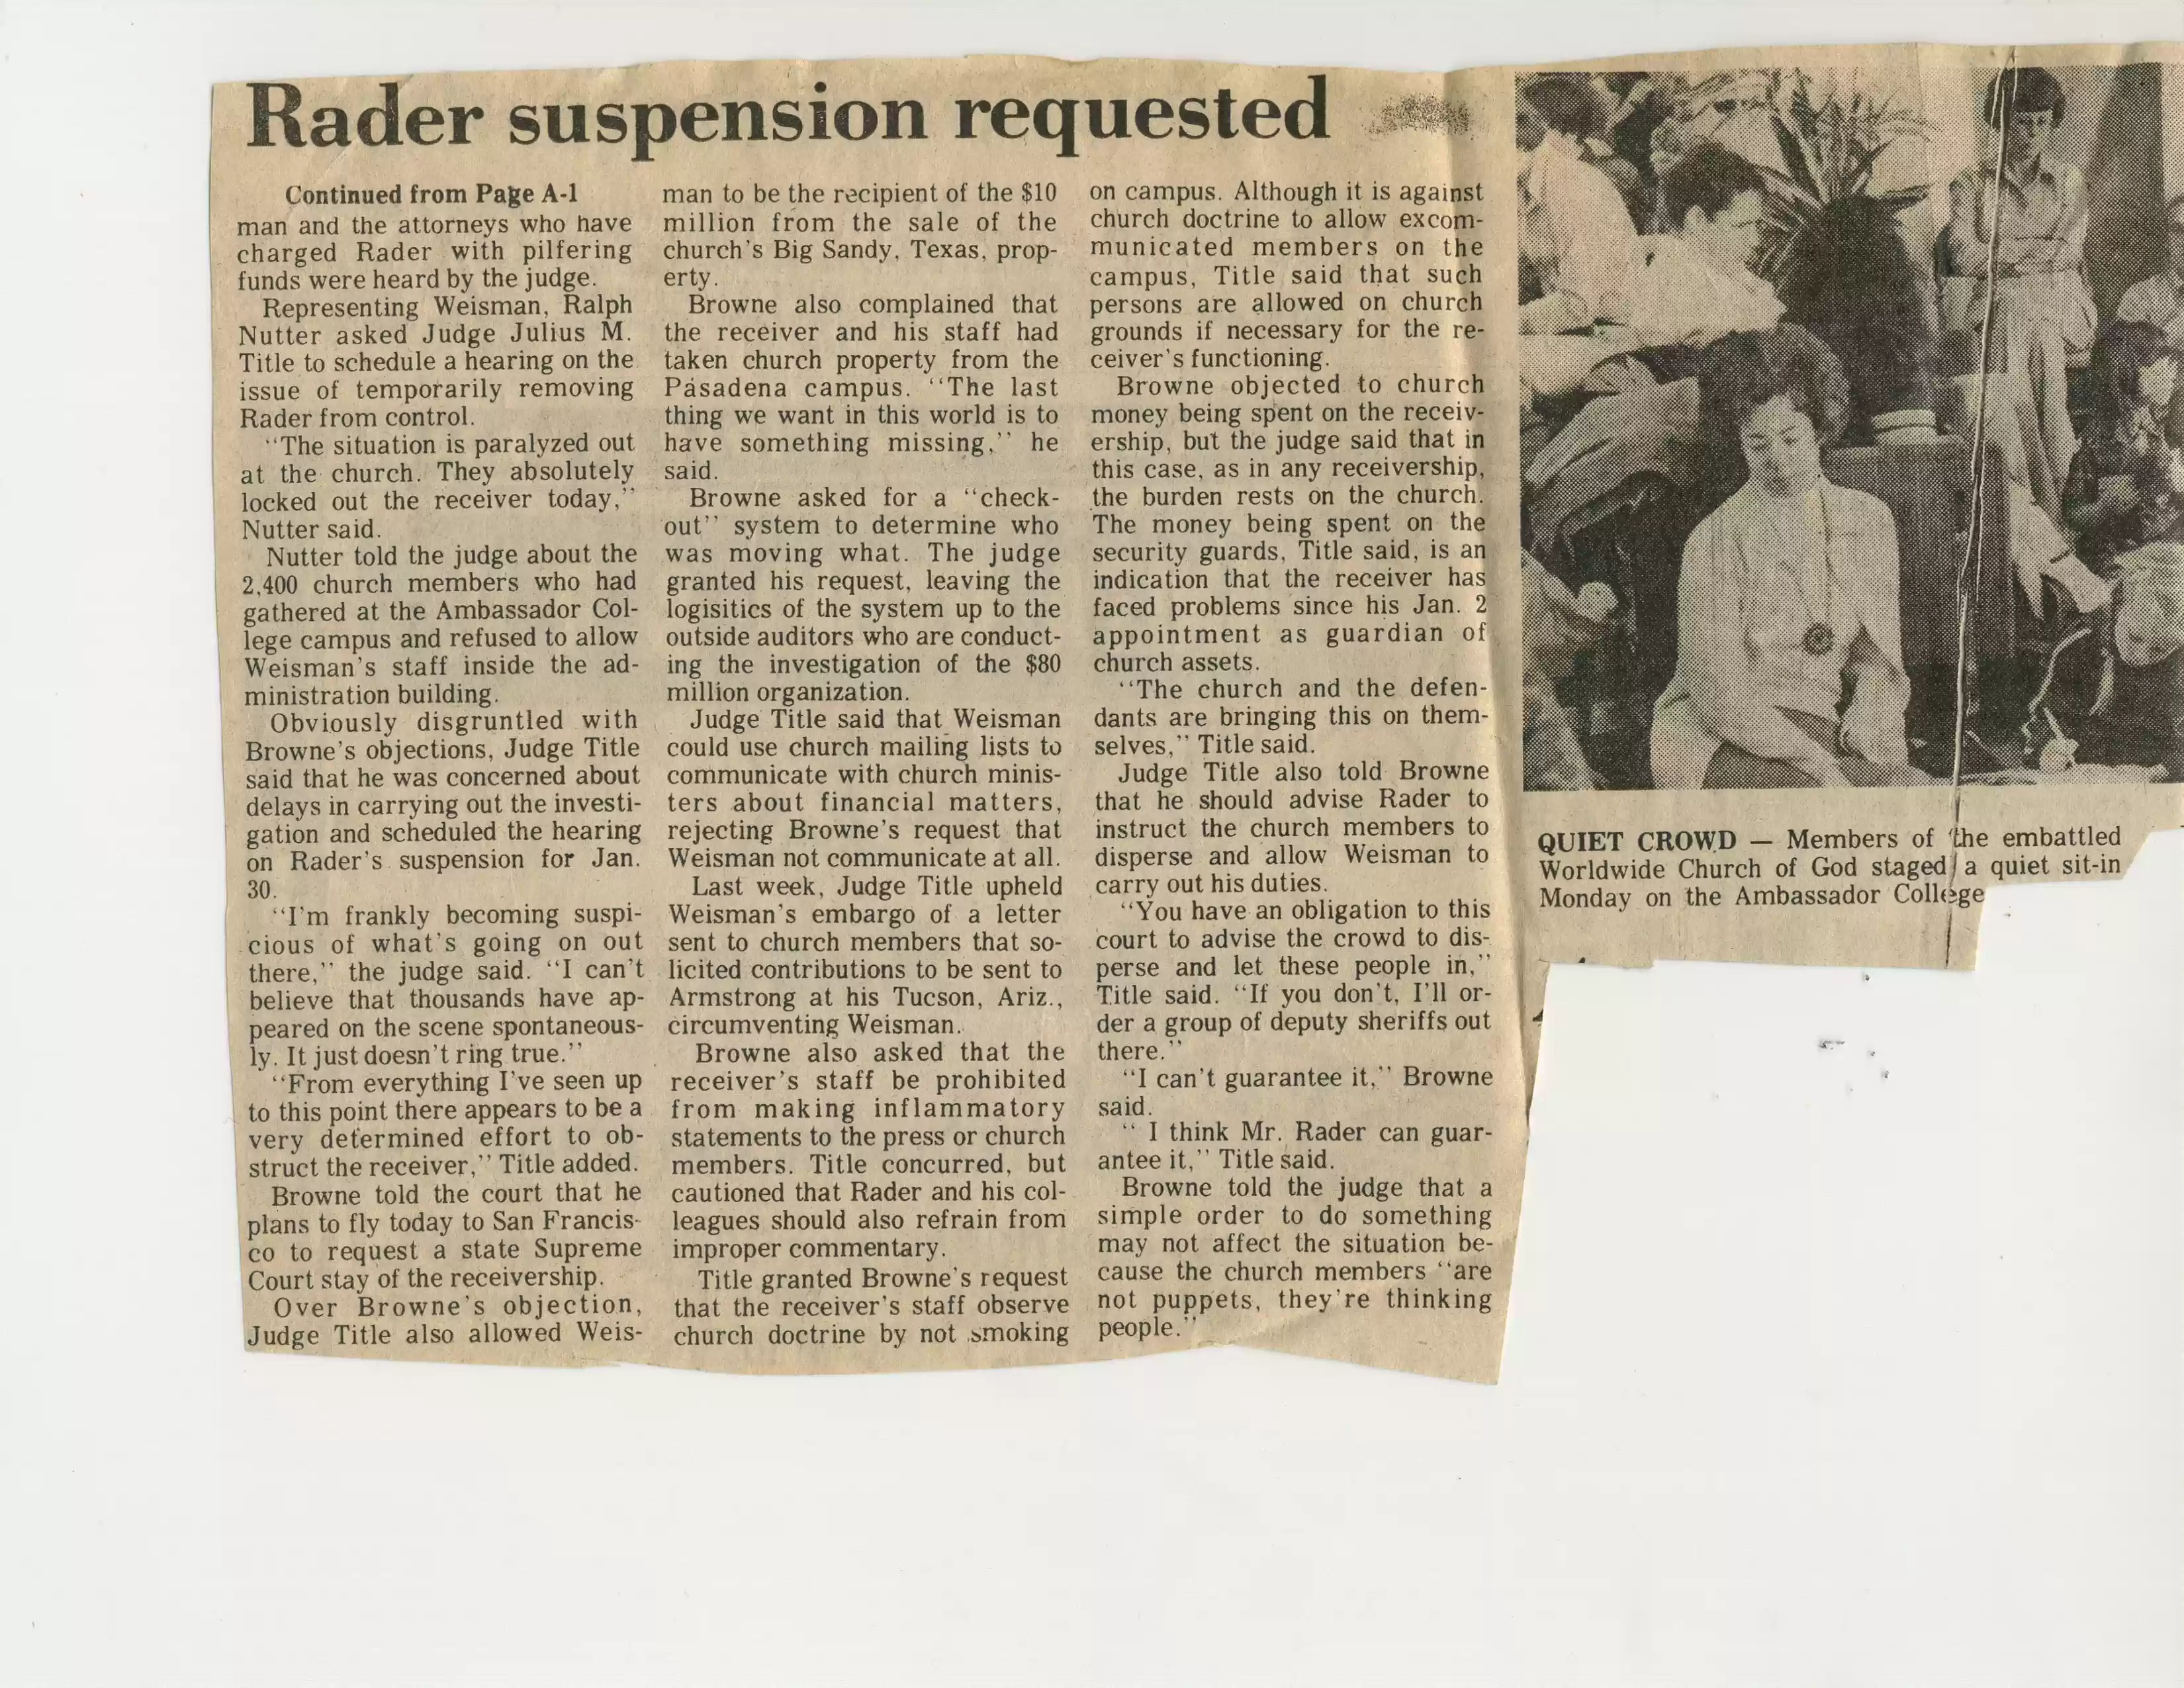 5. Pasadena Star News, 1-24-79